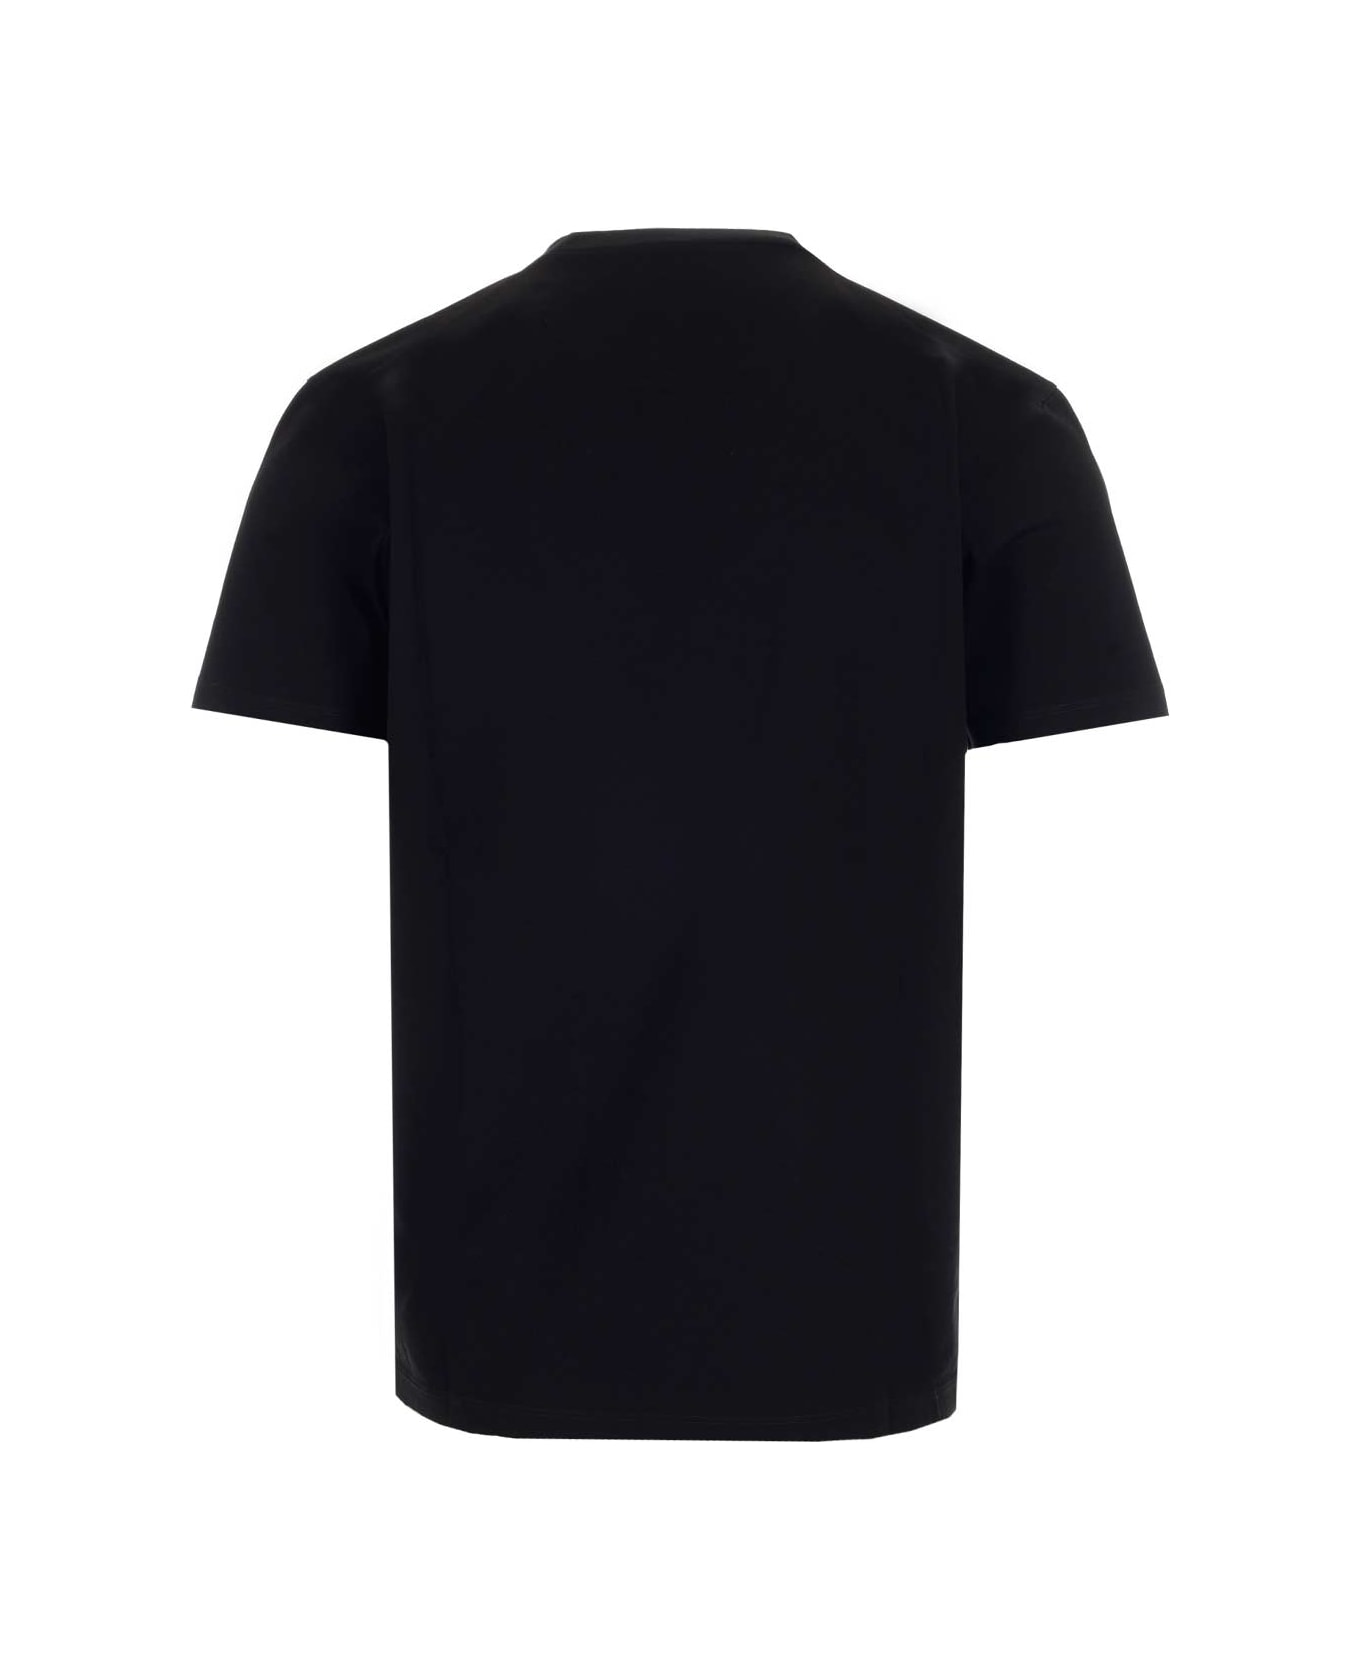 Balmain Black T-shirt With Embossed Logo - Noir/gris シャツ